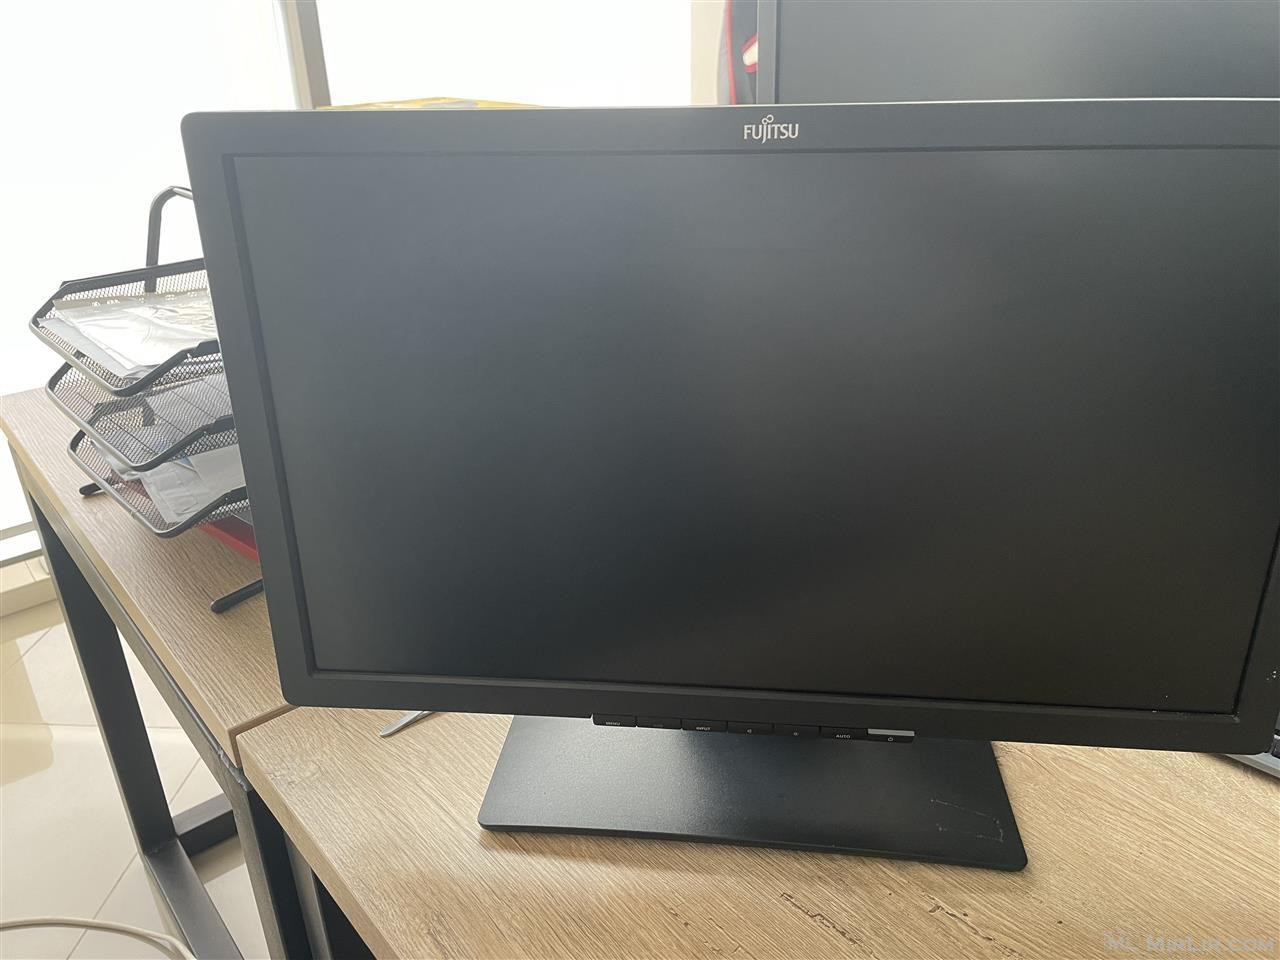 Shiten monitor per kompjutera zyrash dhe shtepi